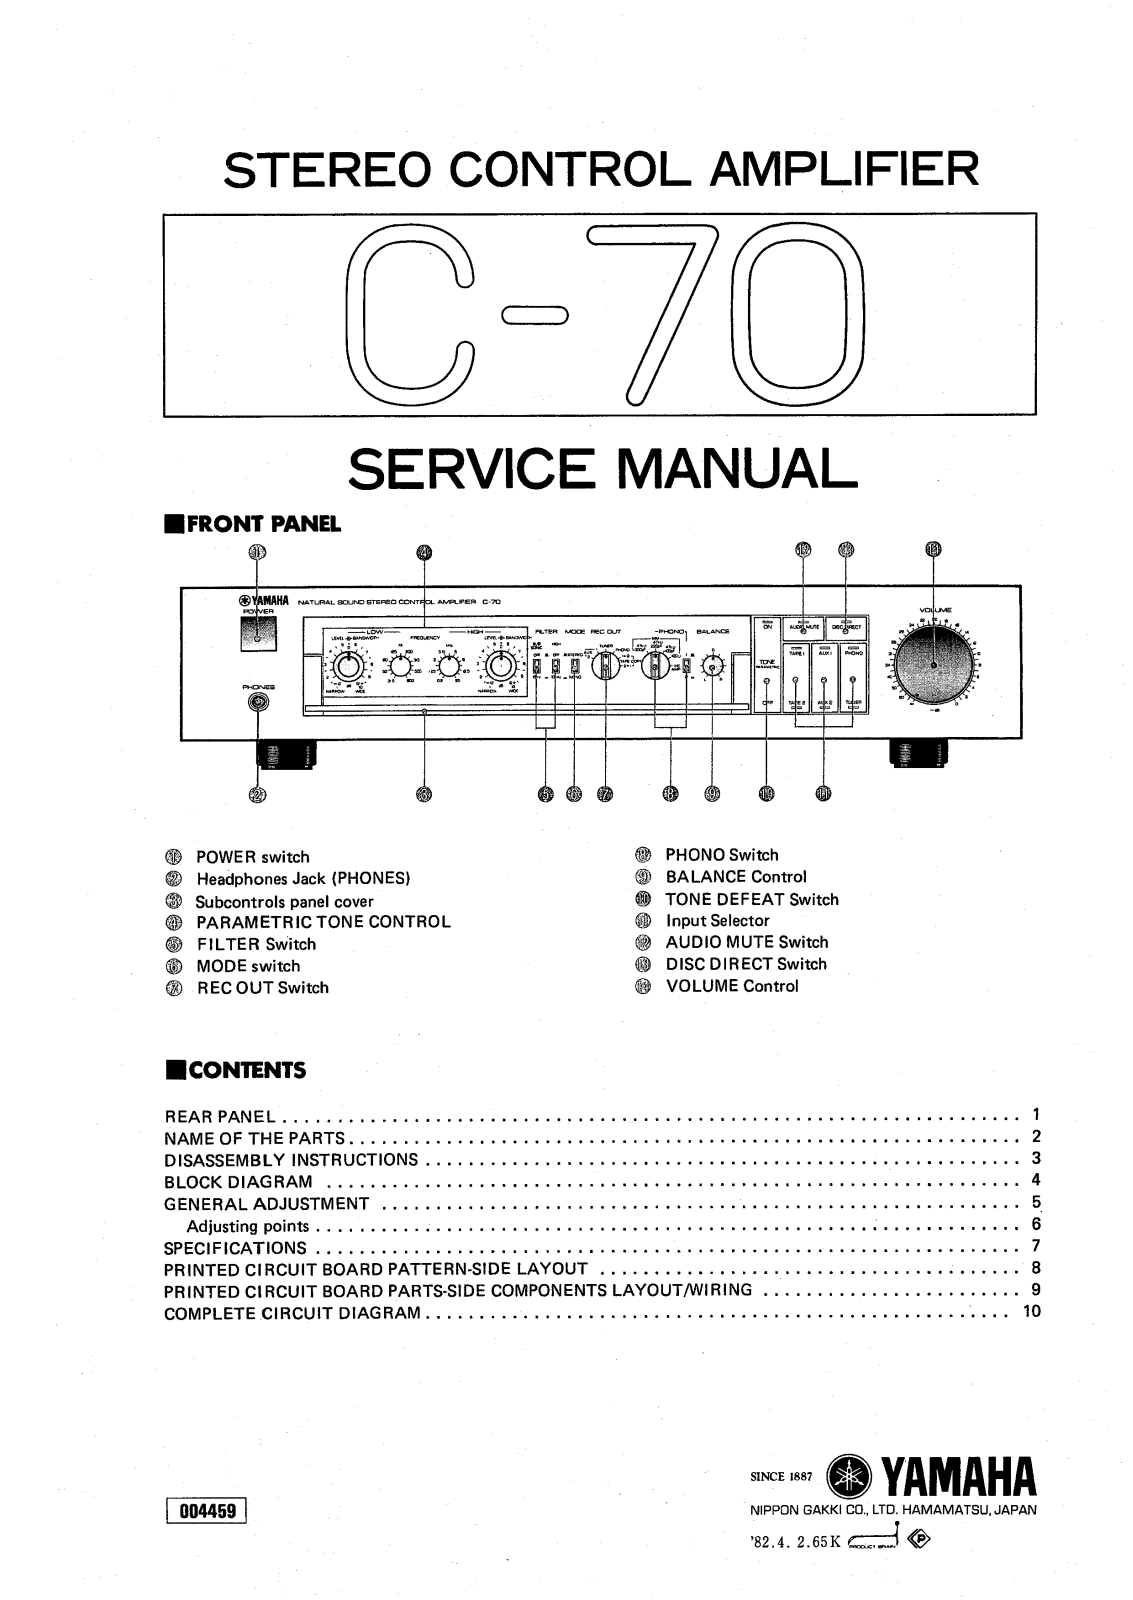 Yamaha C-70 Service Manual